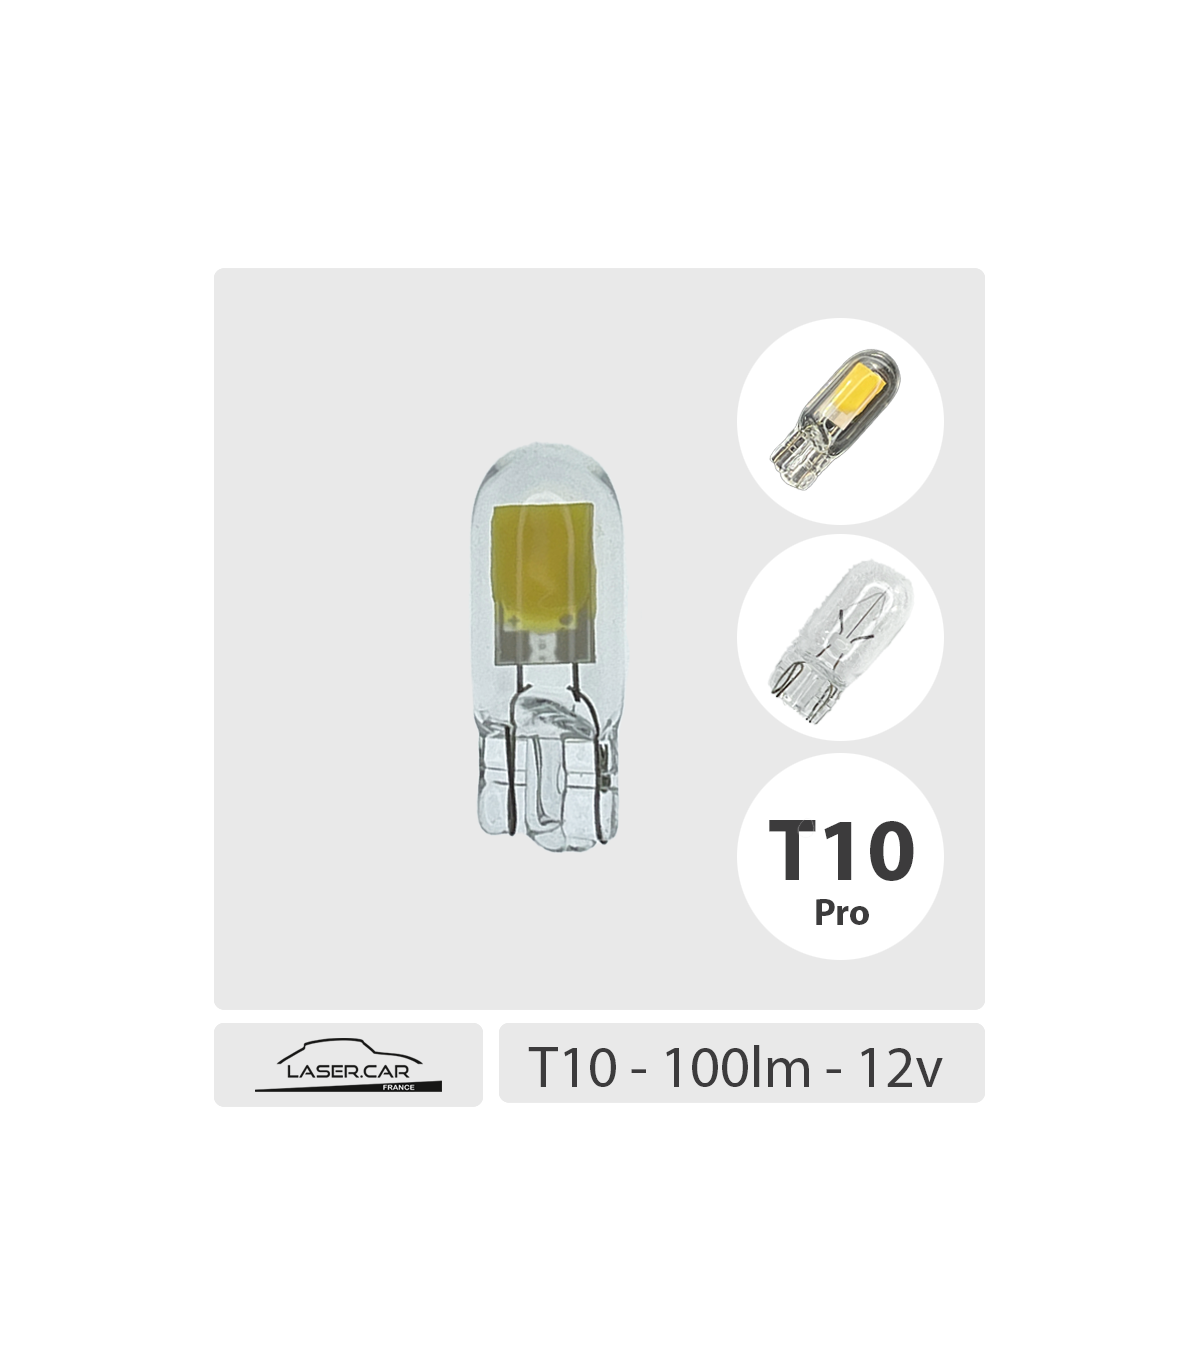 T10 w5w LED, 100 lm - Série PRO - Can Bus